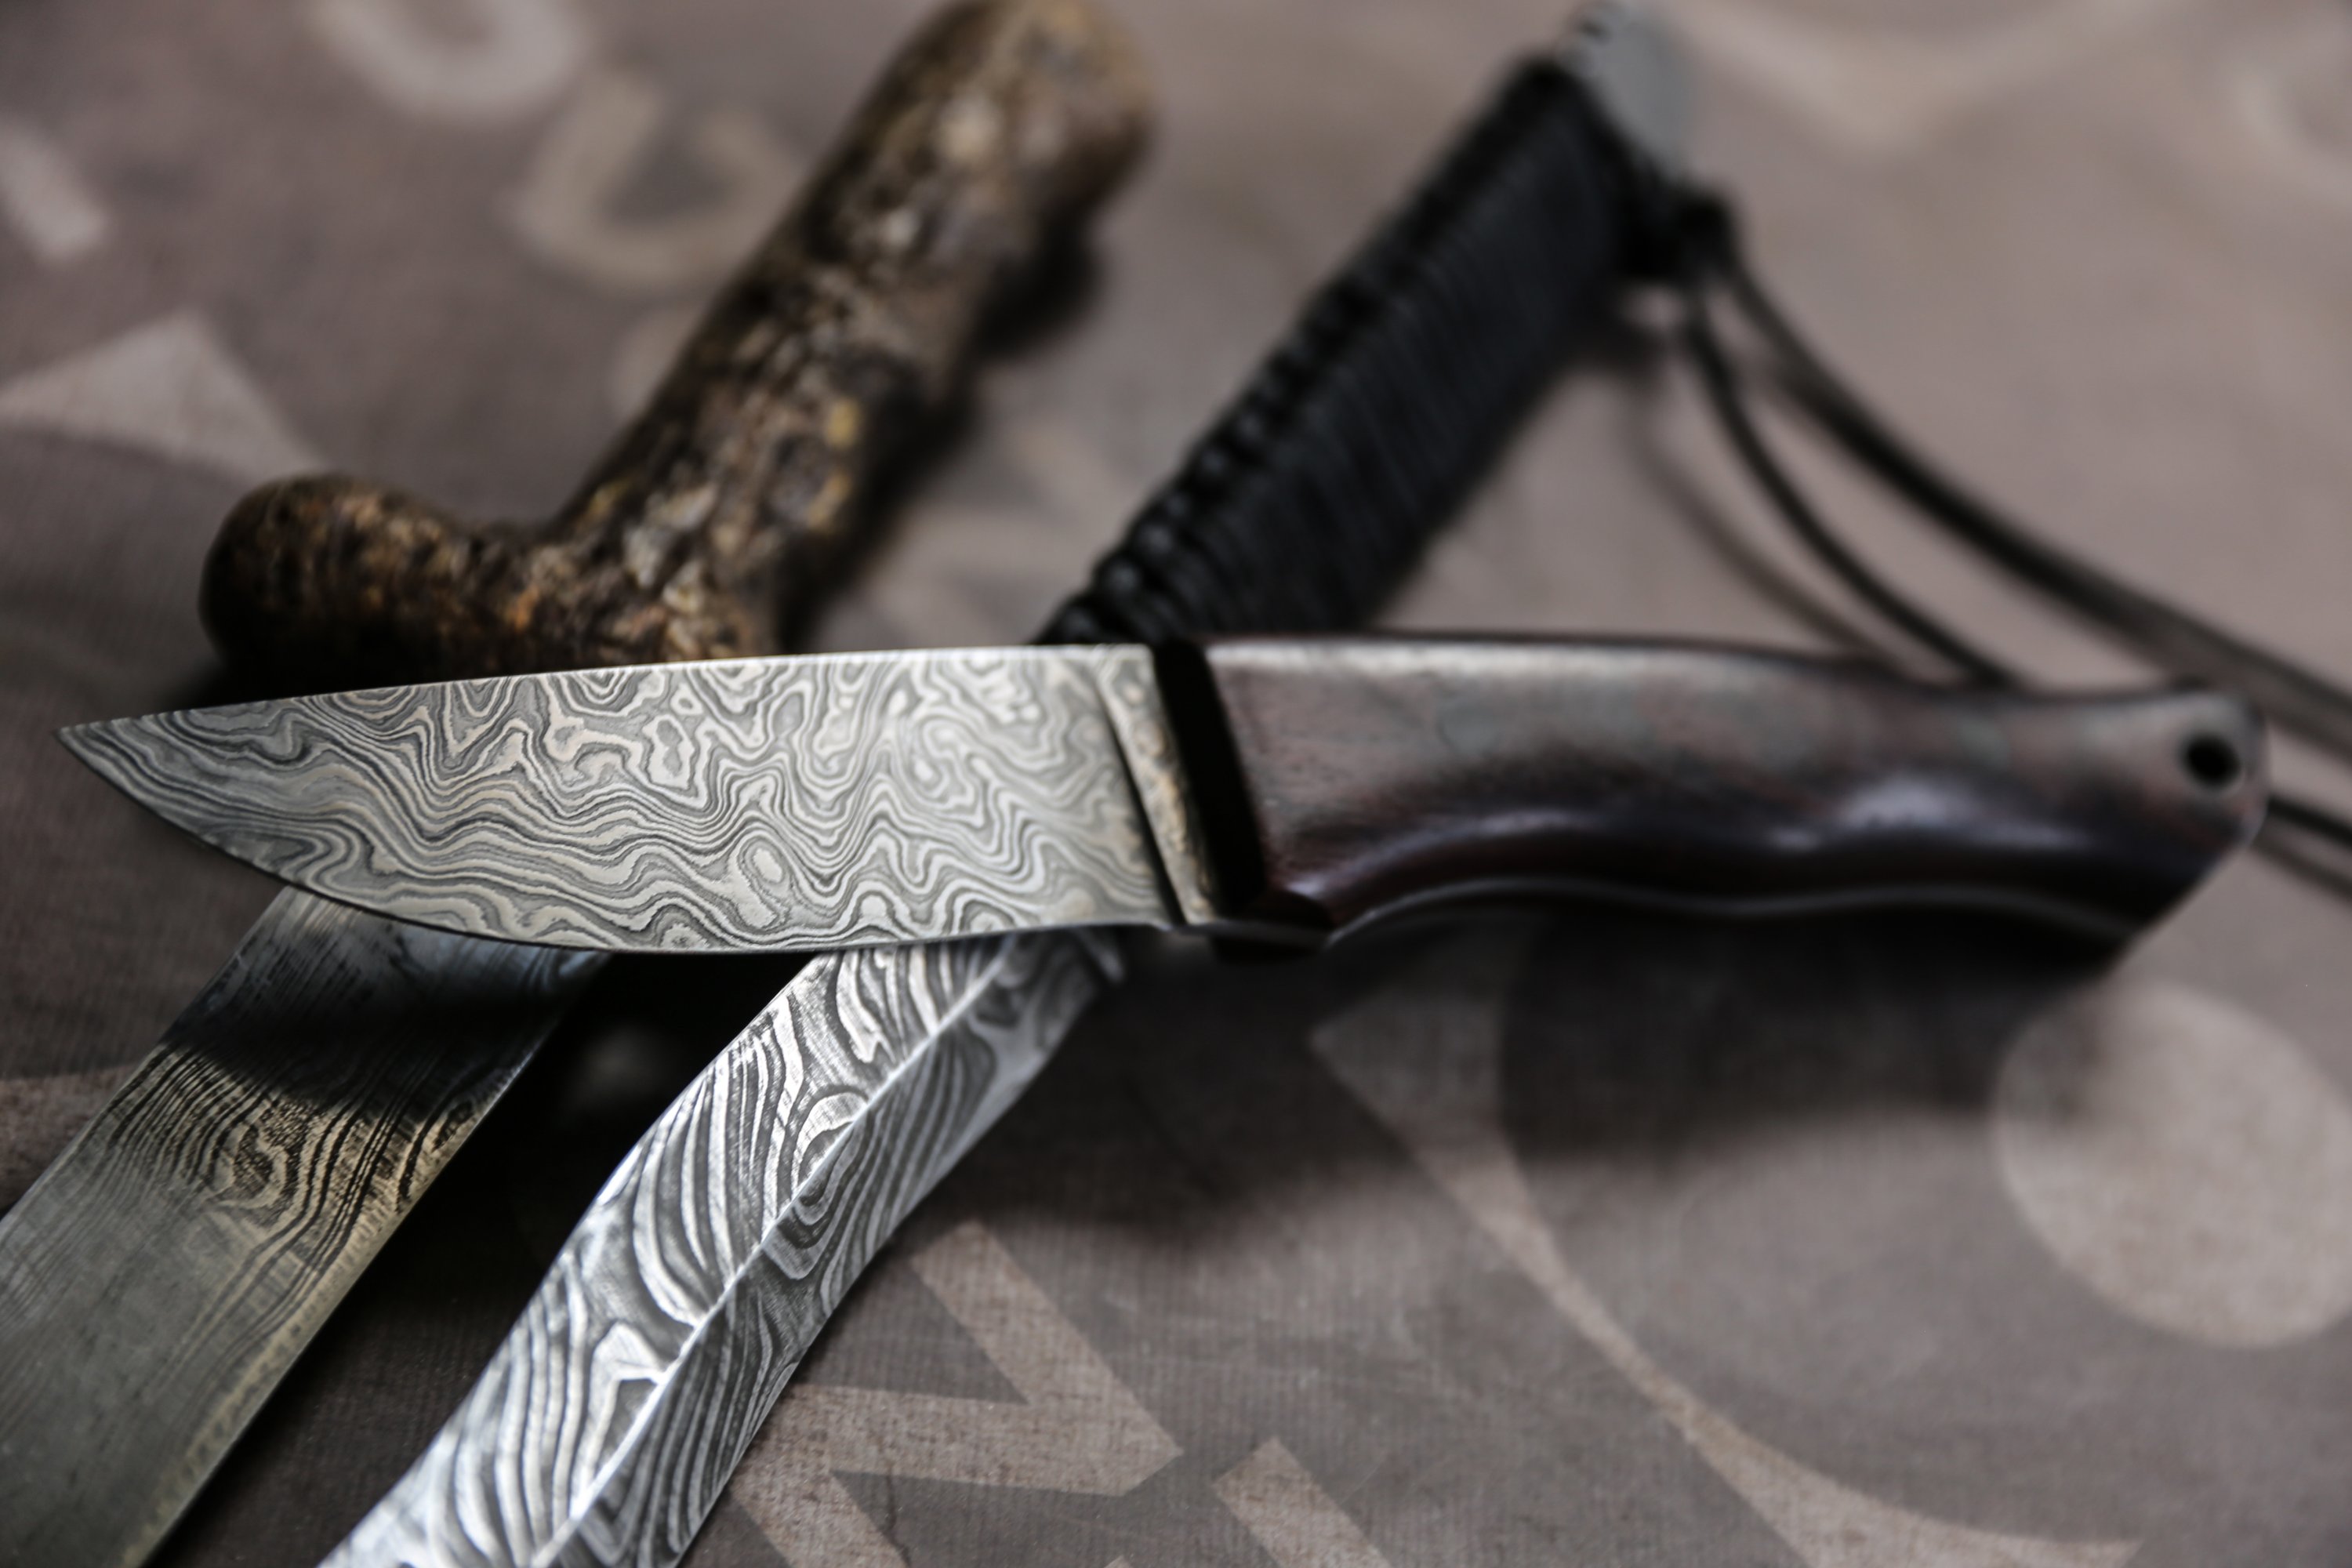 Handmade Damascus steel weapons by metalsmith Yusuf Bayyiğit shown in his workshop in Malatya, Turkey, Nov. 9, 2021. (AA Photo)